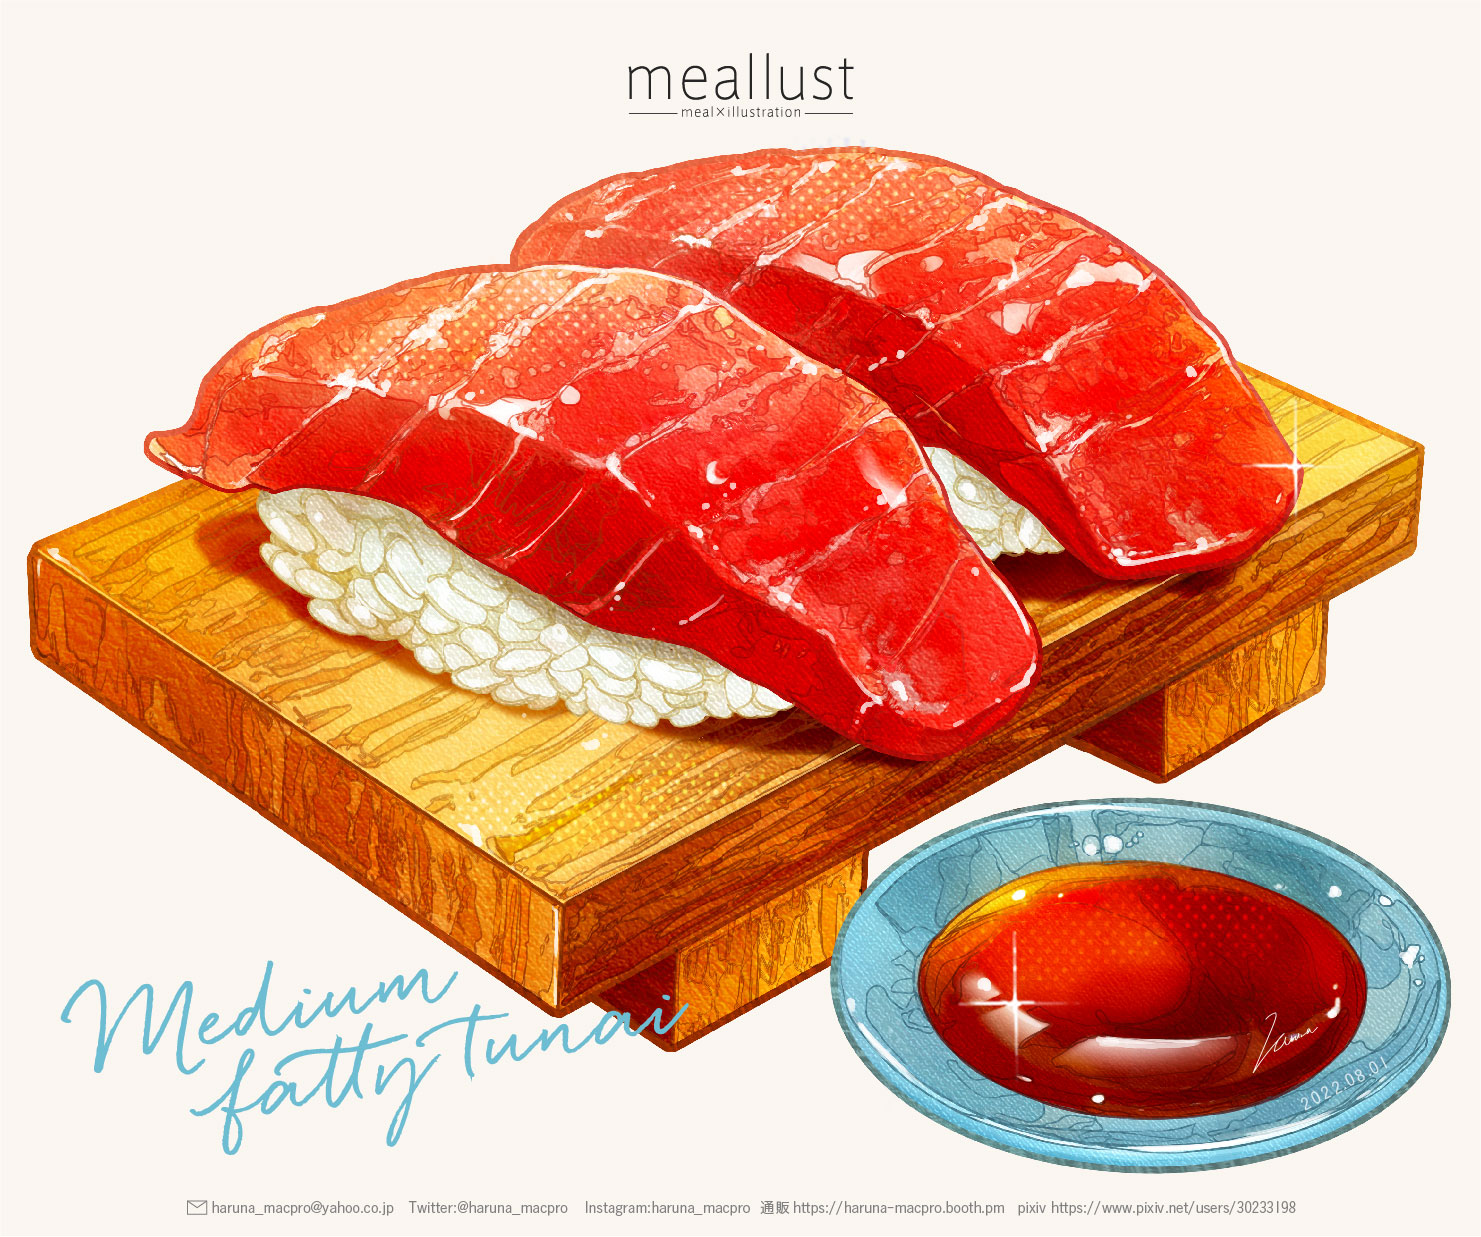 Medium fatty tunai